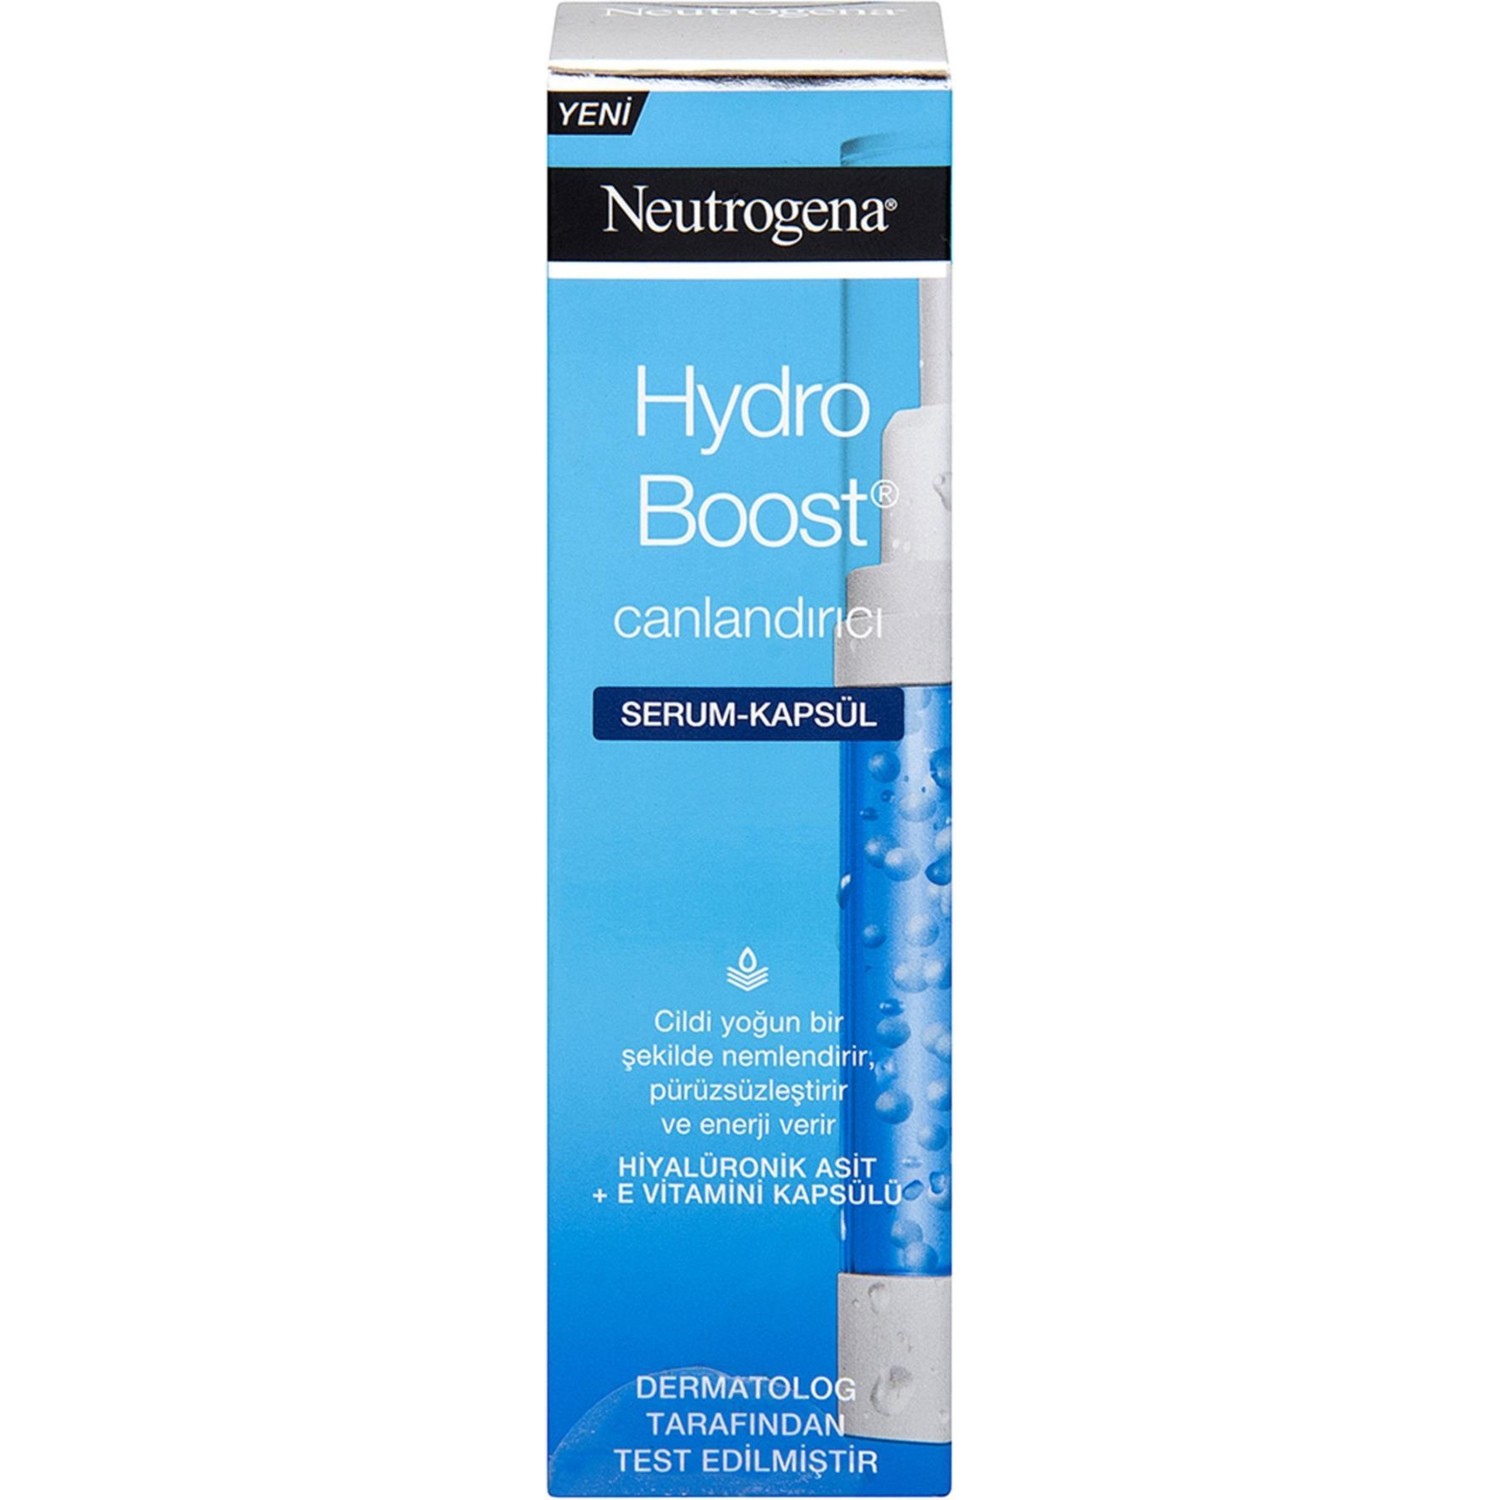 сыворотка капсула neutrogena serum capsule hydro boost 30 мл Крем для тела Neutrogena Hydro Boost восстанавливающая, 30 мл